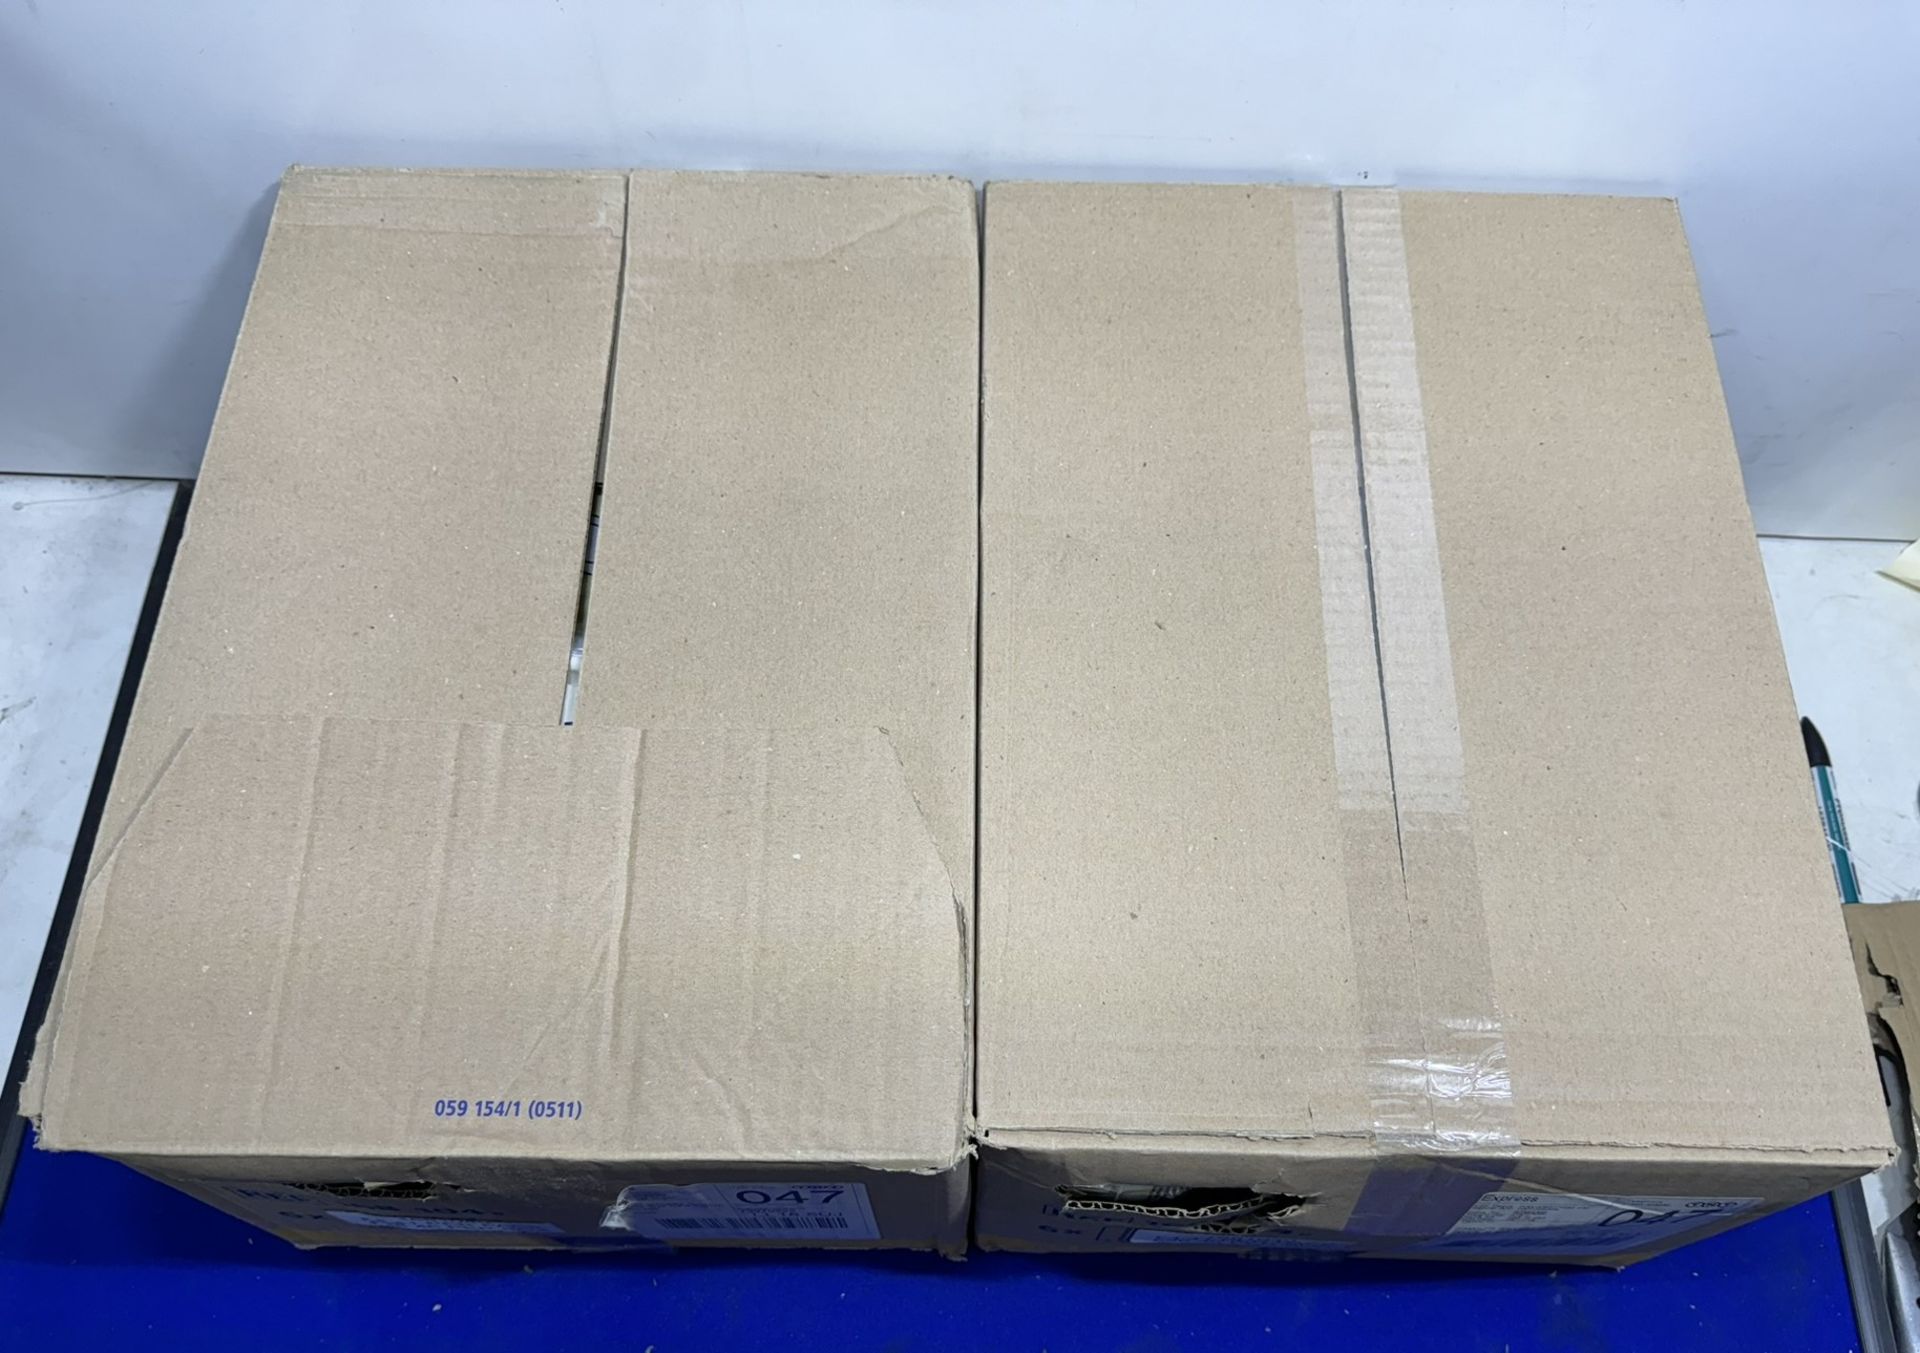 2 x Boxes 1681040 Hartmann MoliMed Comfort Midi - Image 2 of 3